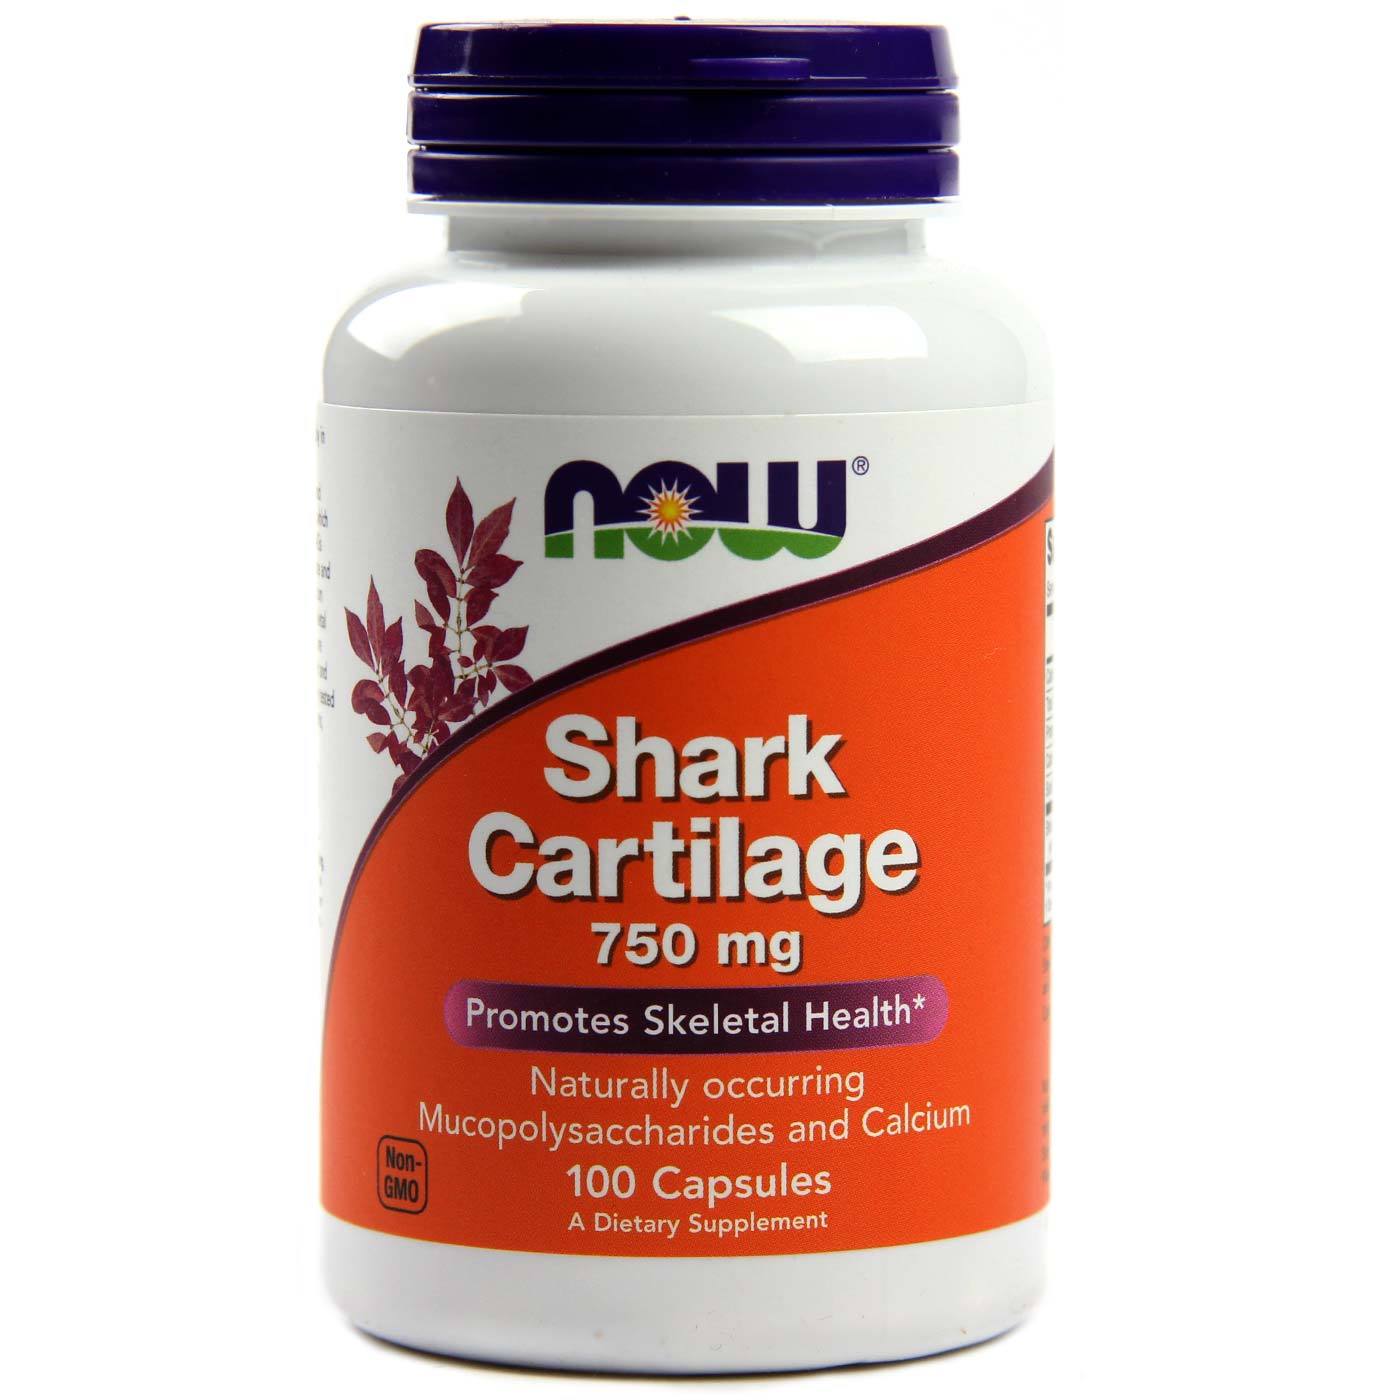 Shark Cartilage, 100 pcs, Now. Special supplements. 